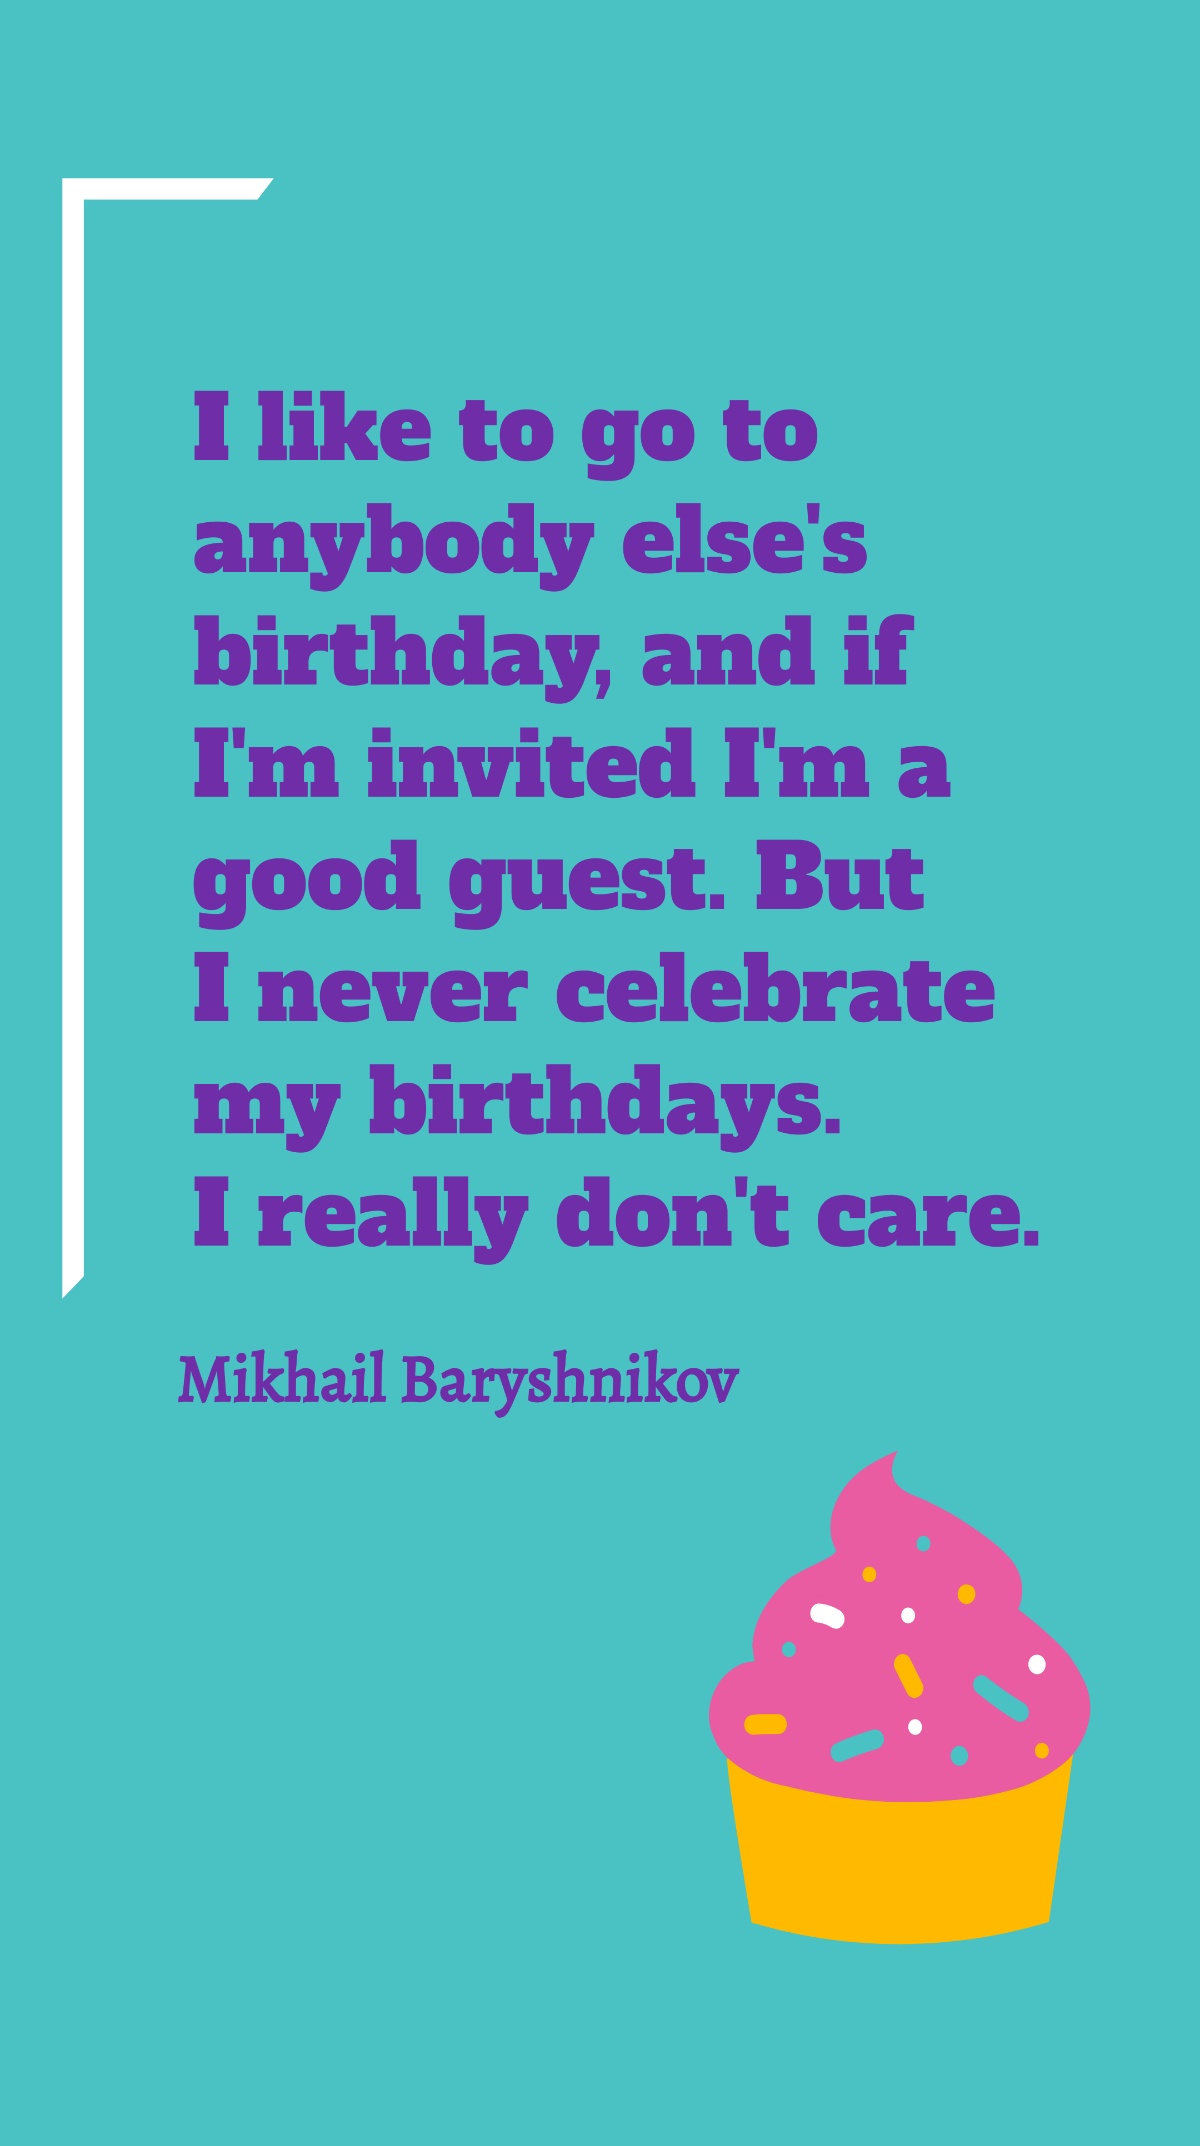 Mikhail Baryshnikov - I like to go to anybody else's birthday, and if I'm invited I'm a good guest. But I never celebrate my birthdays. I really don't care.